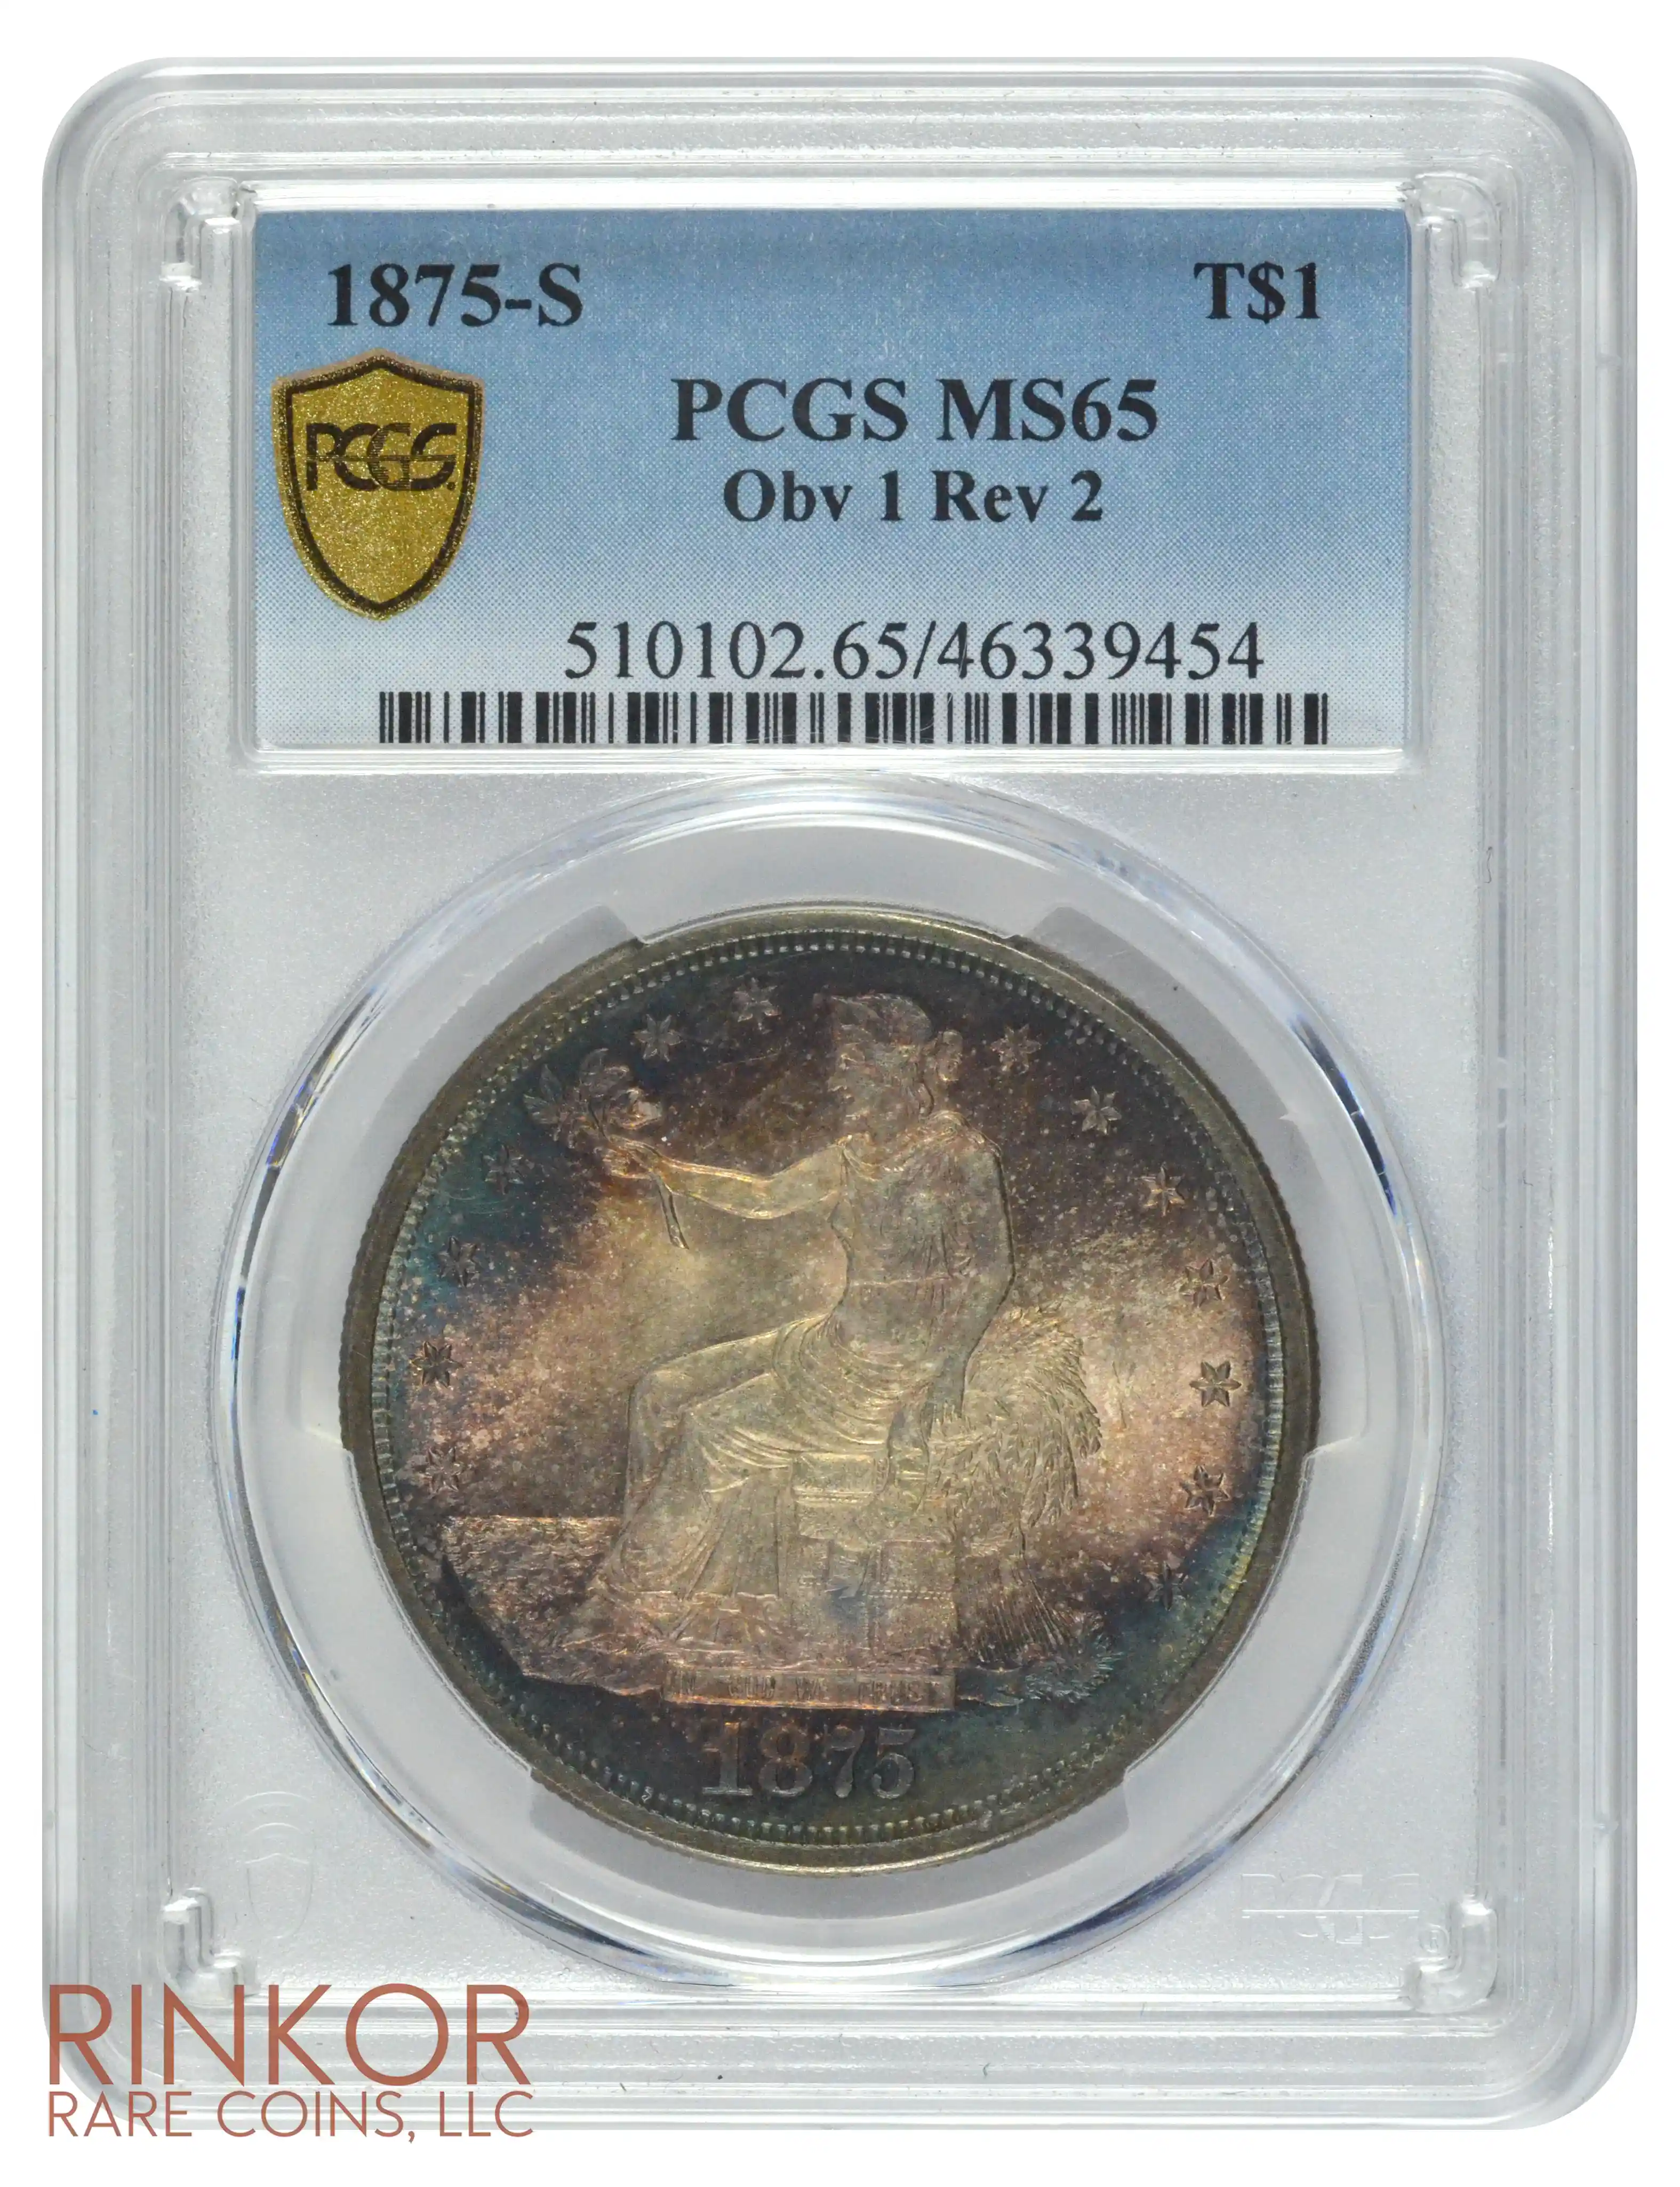 1875-S Trade Obv 1 Rev 2 PCGS MS 65